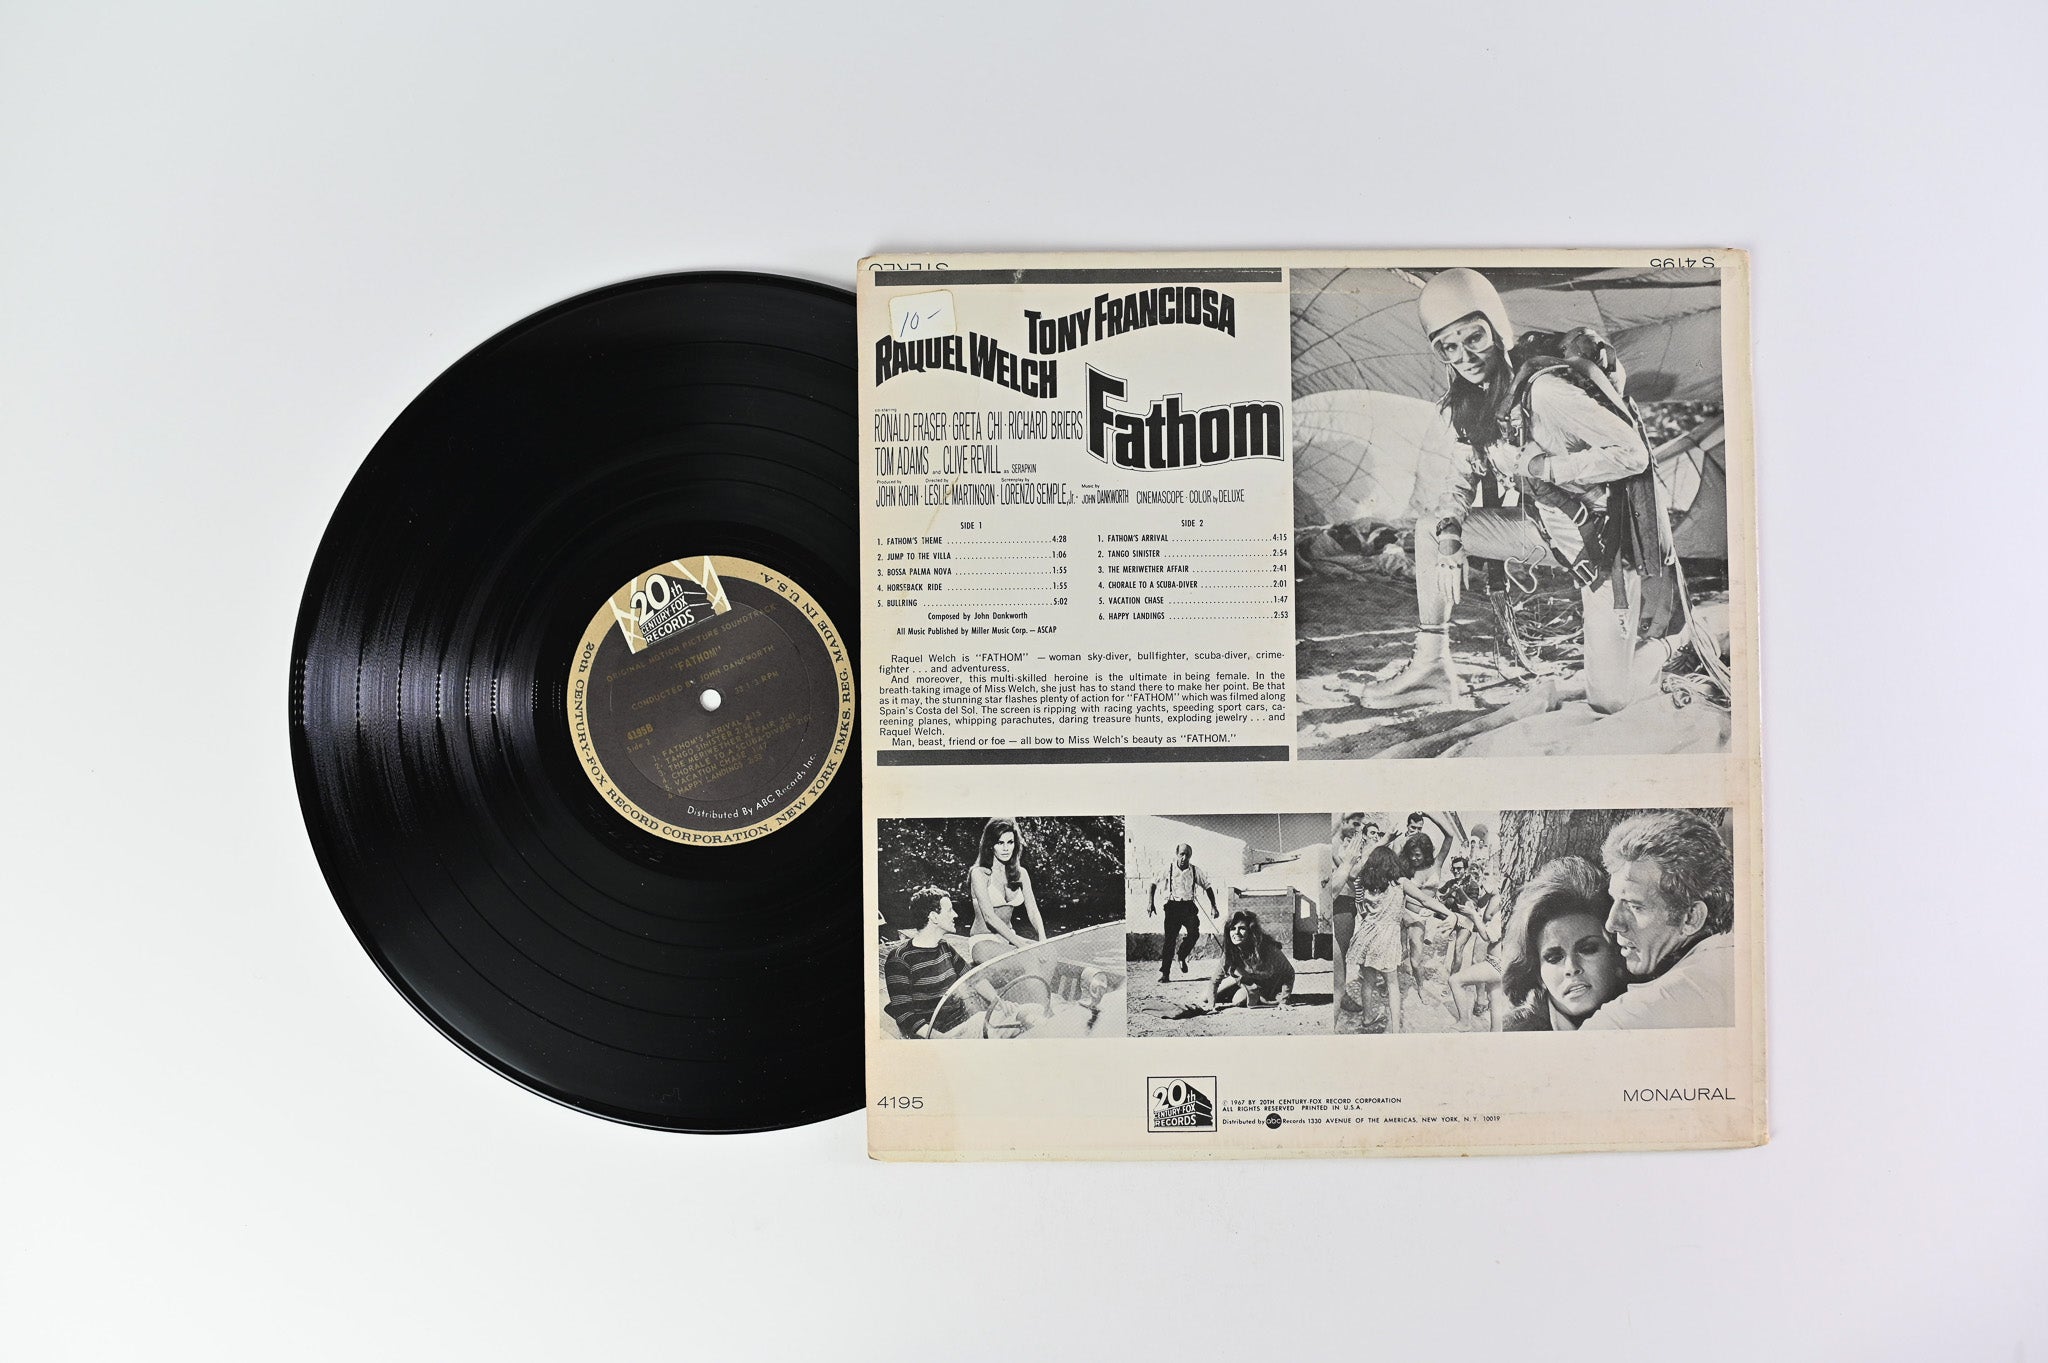 John Dankworth - Fathom (Original Motion Picture Soundtrack Album) on 20th Century Fox Records